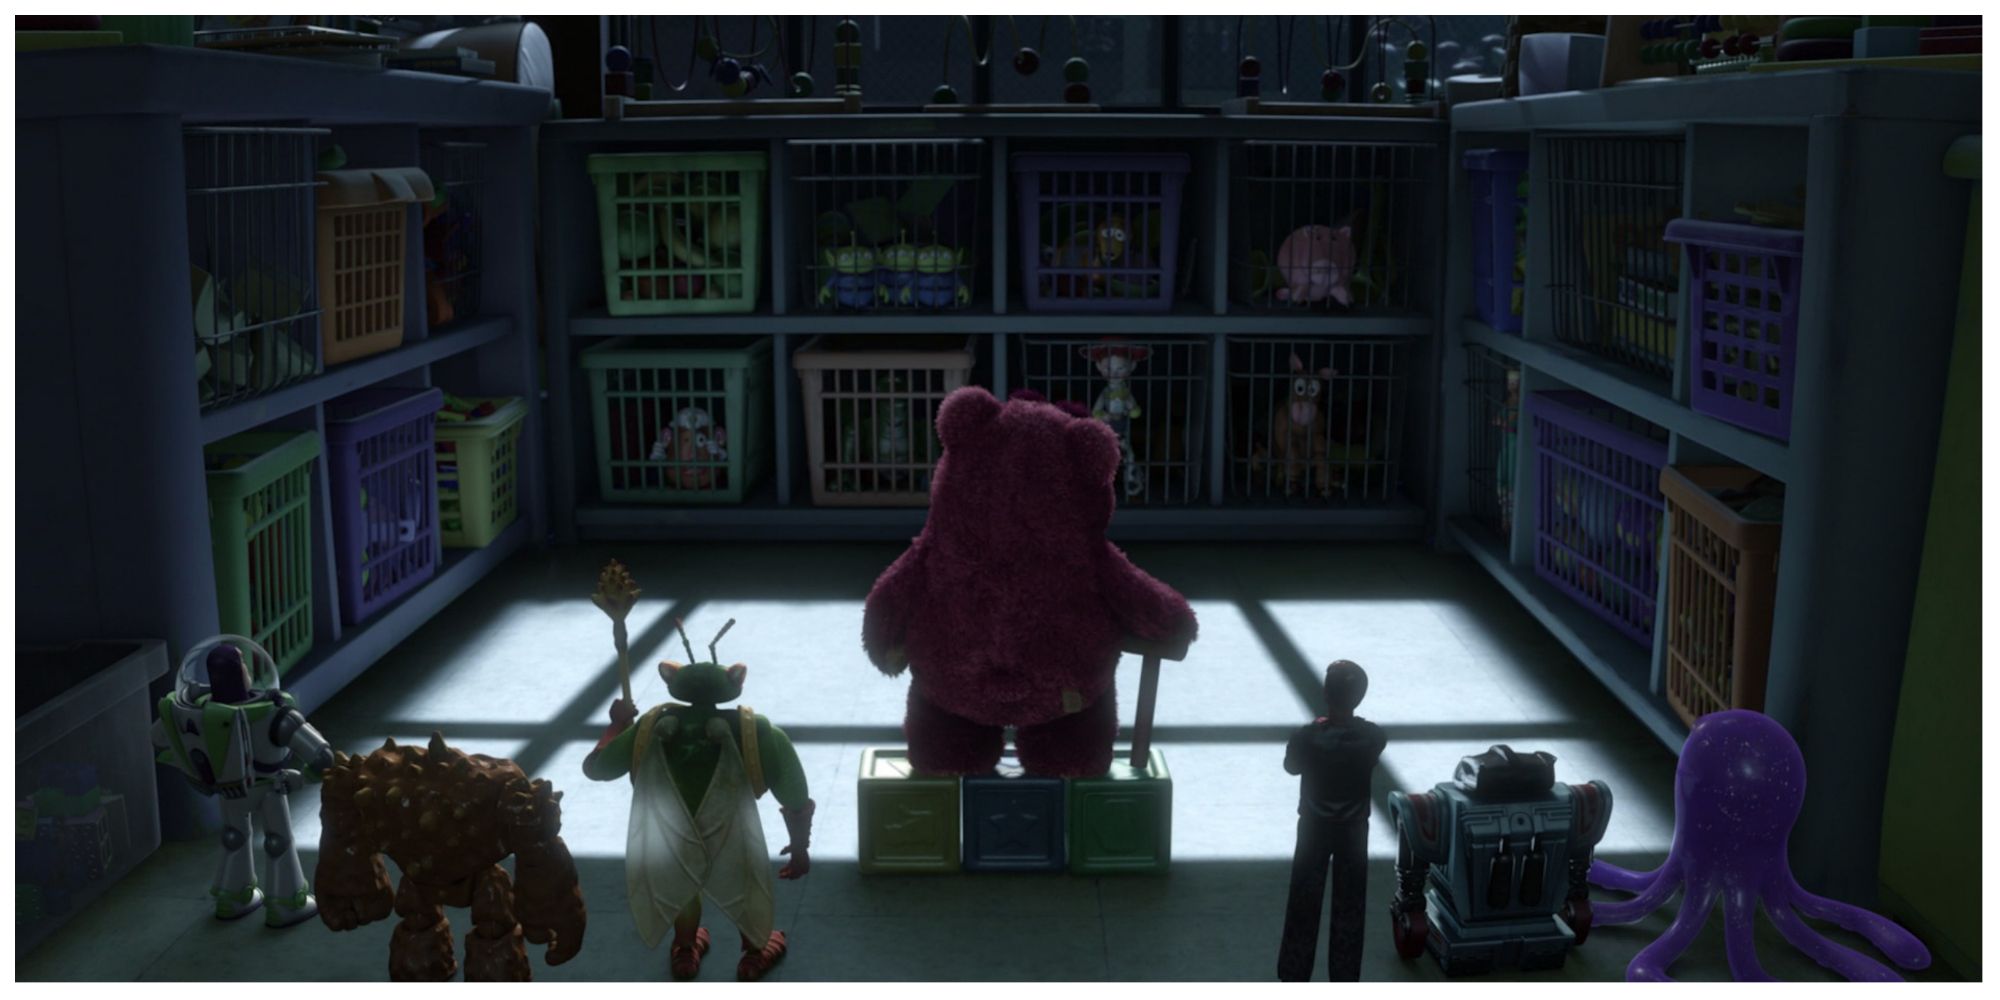 Toy Story 3 Prison scene